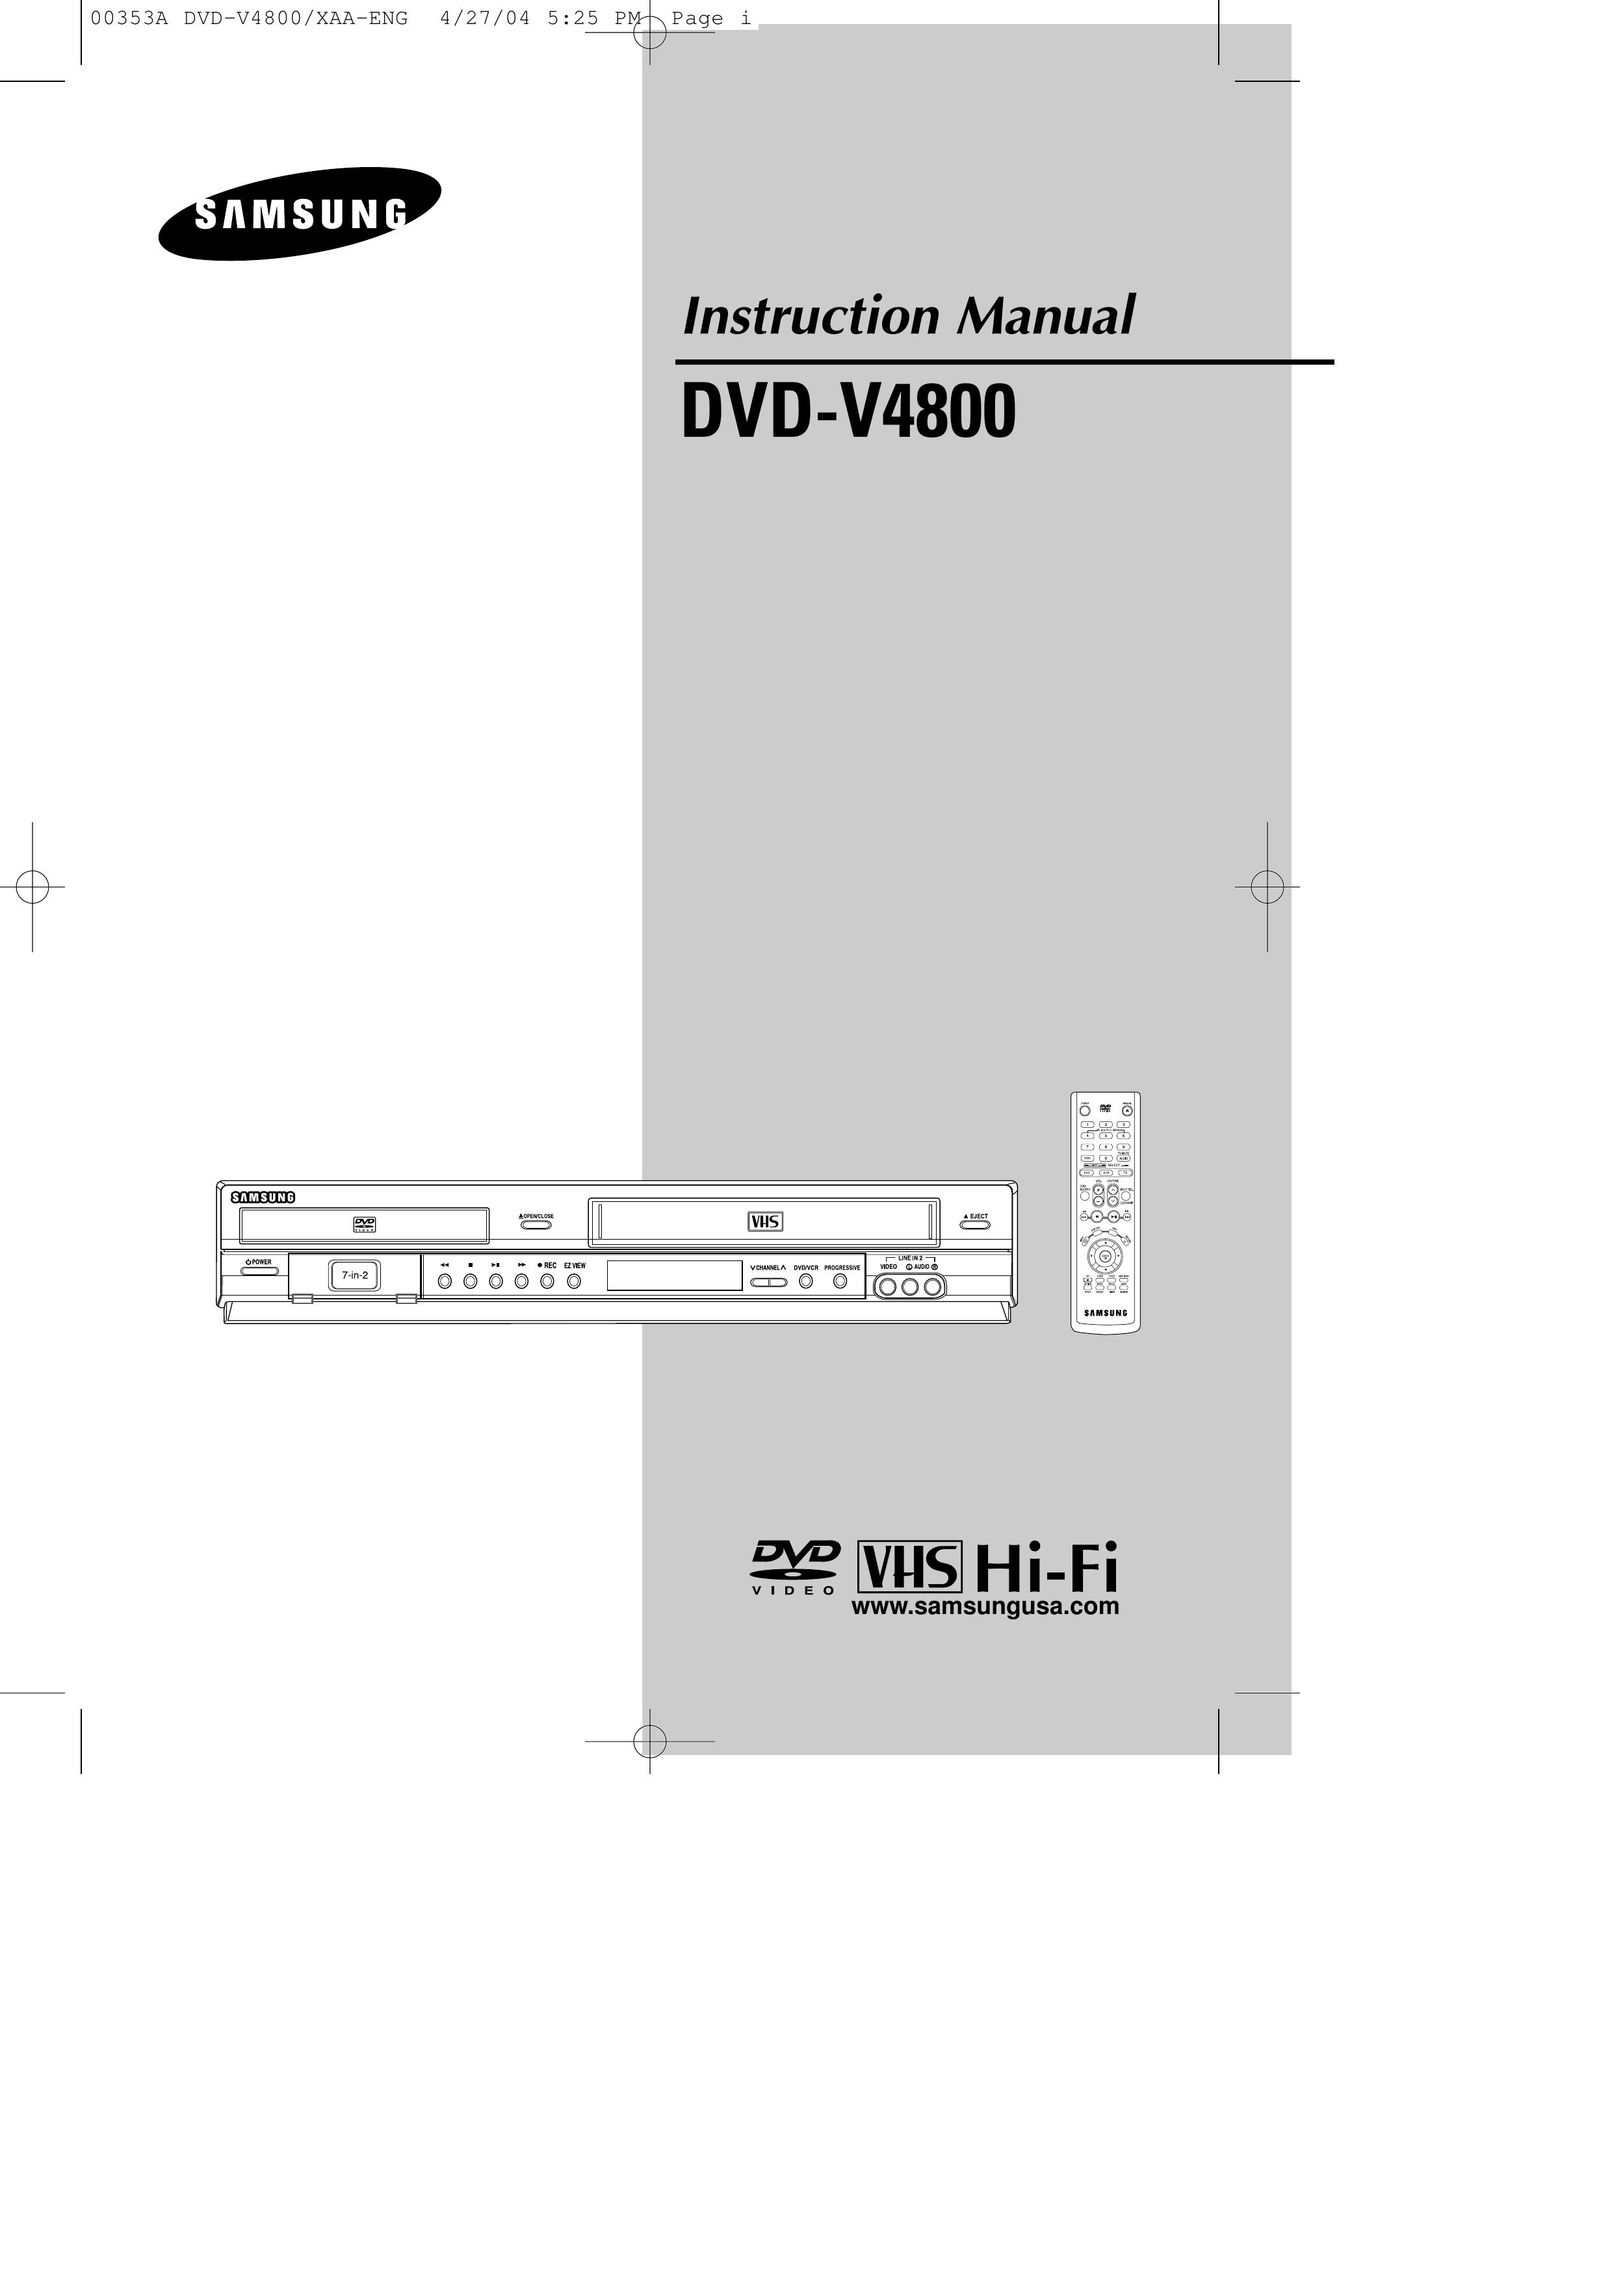 Samsung DVD-V4800 MP3 Player User Manual